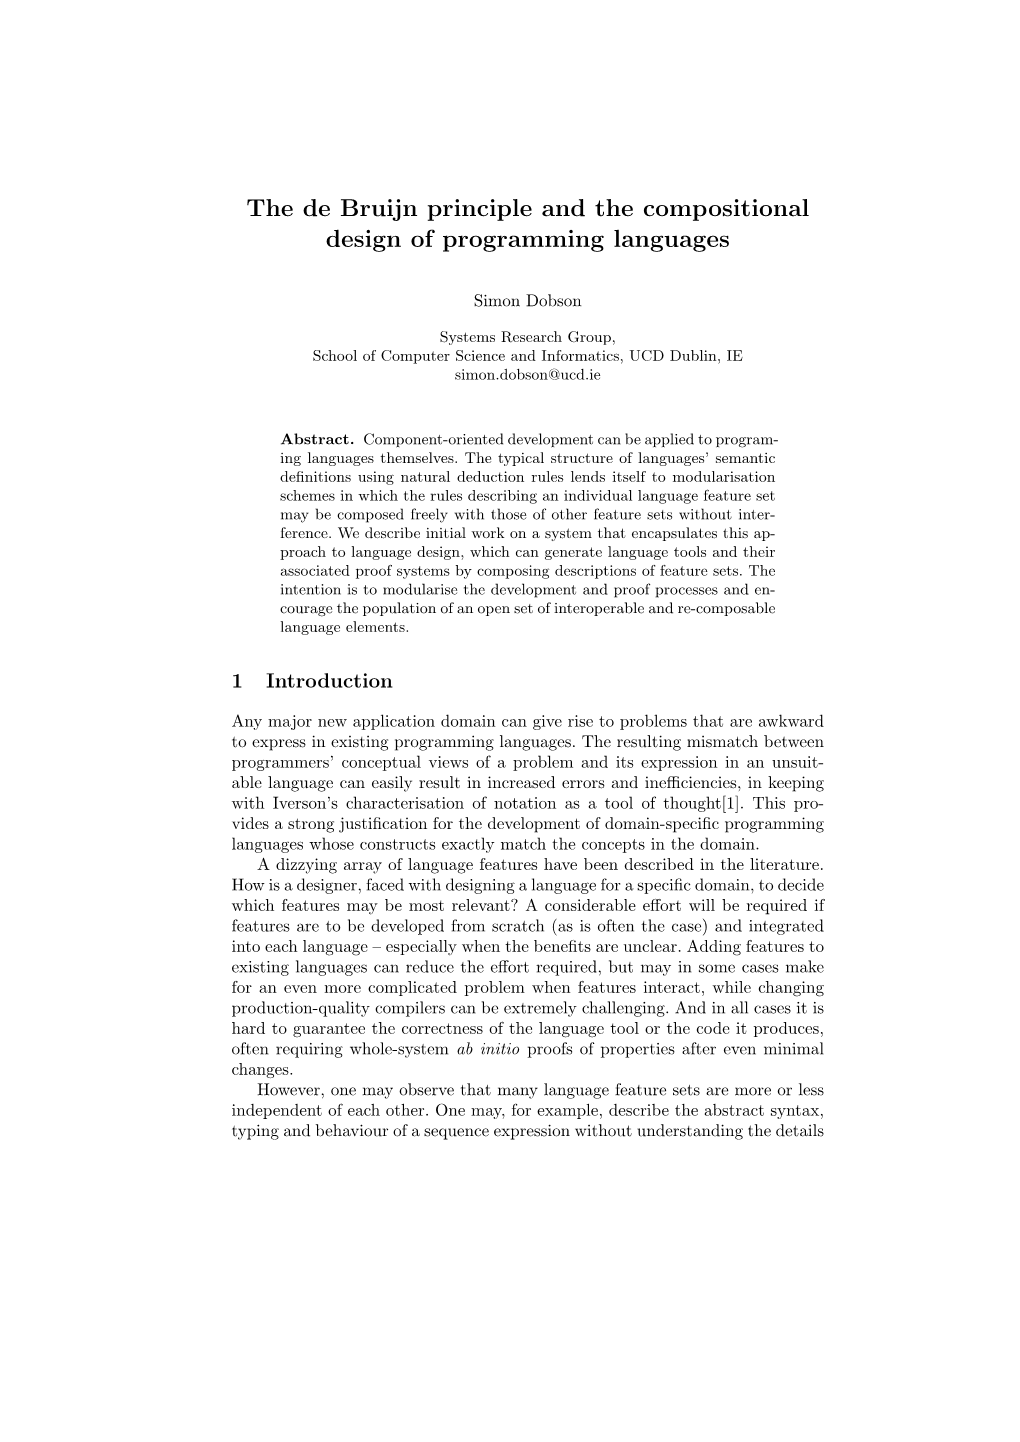 The De Bruijn Principle and the Compositional Design of Programming Languages